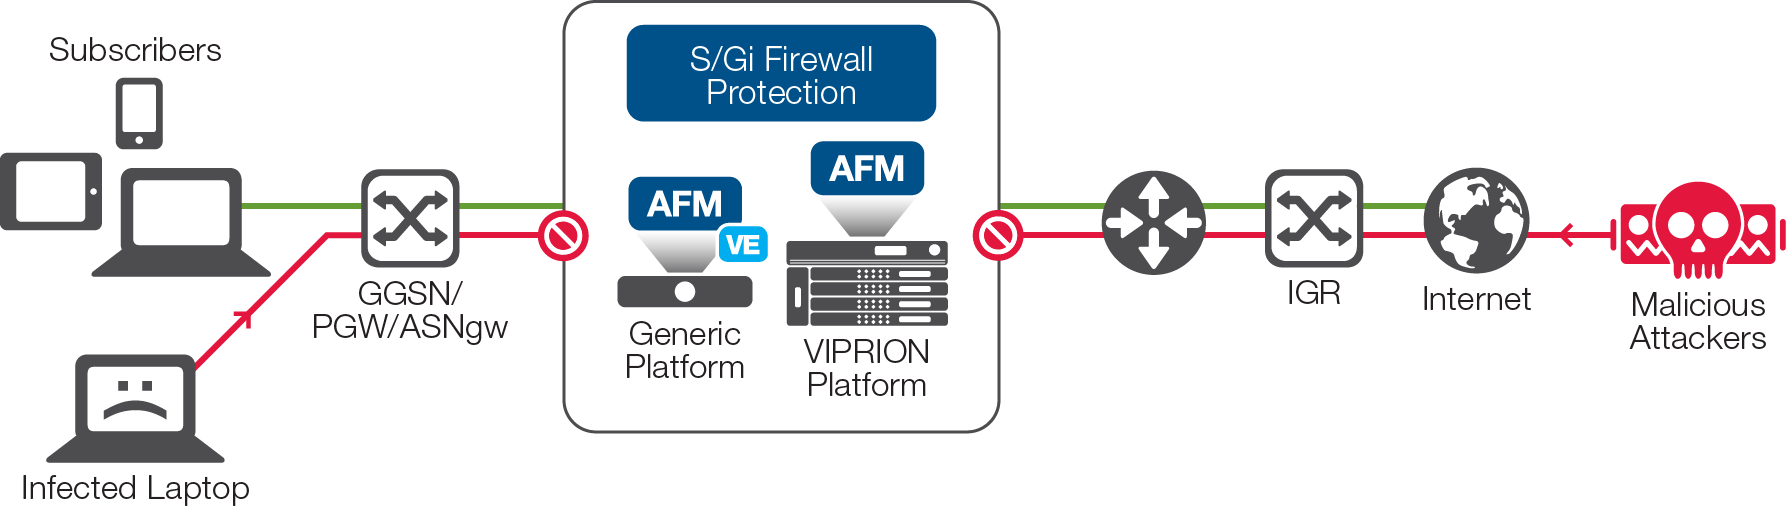 Diagram of S/Gi Firewall Protection